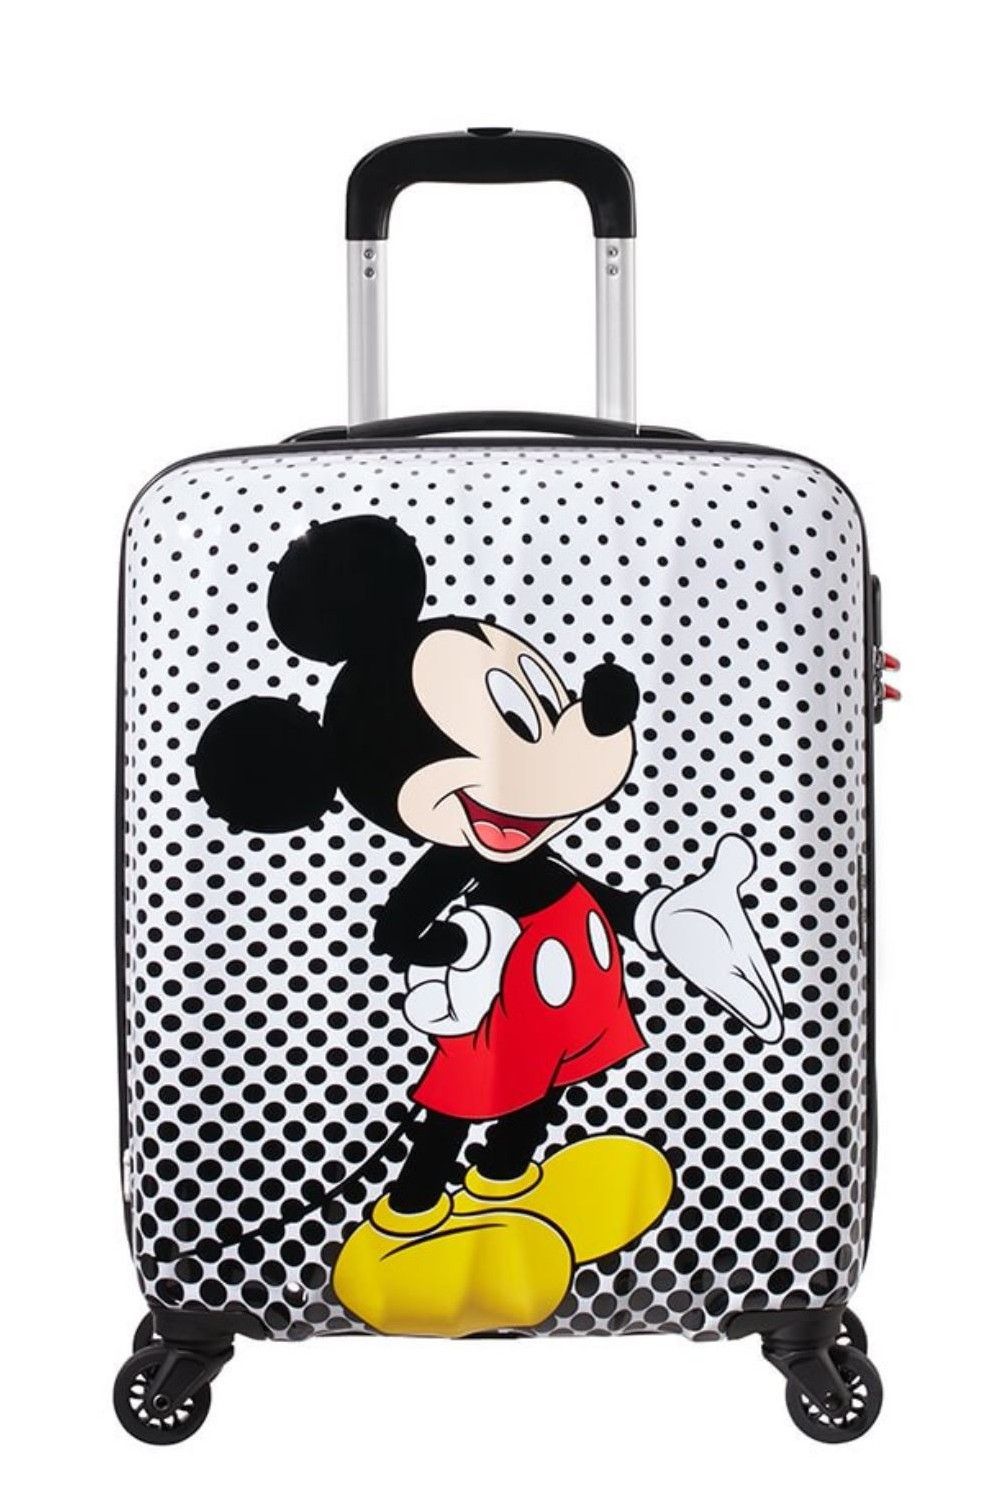 AT children's suitcase Mickey Polka Dot 65 cm 52 Liter